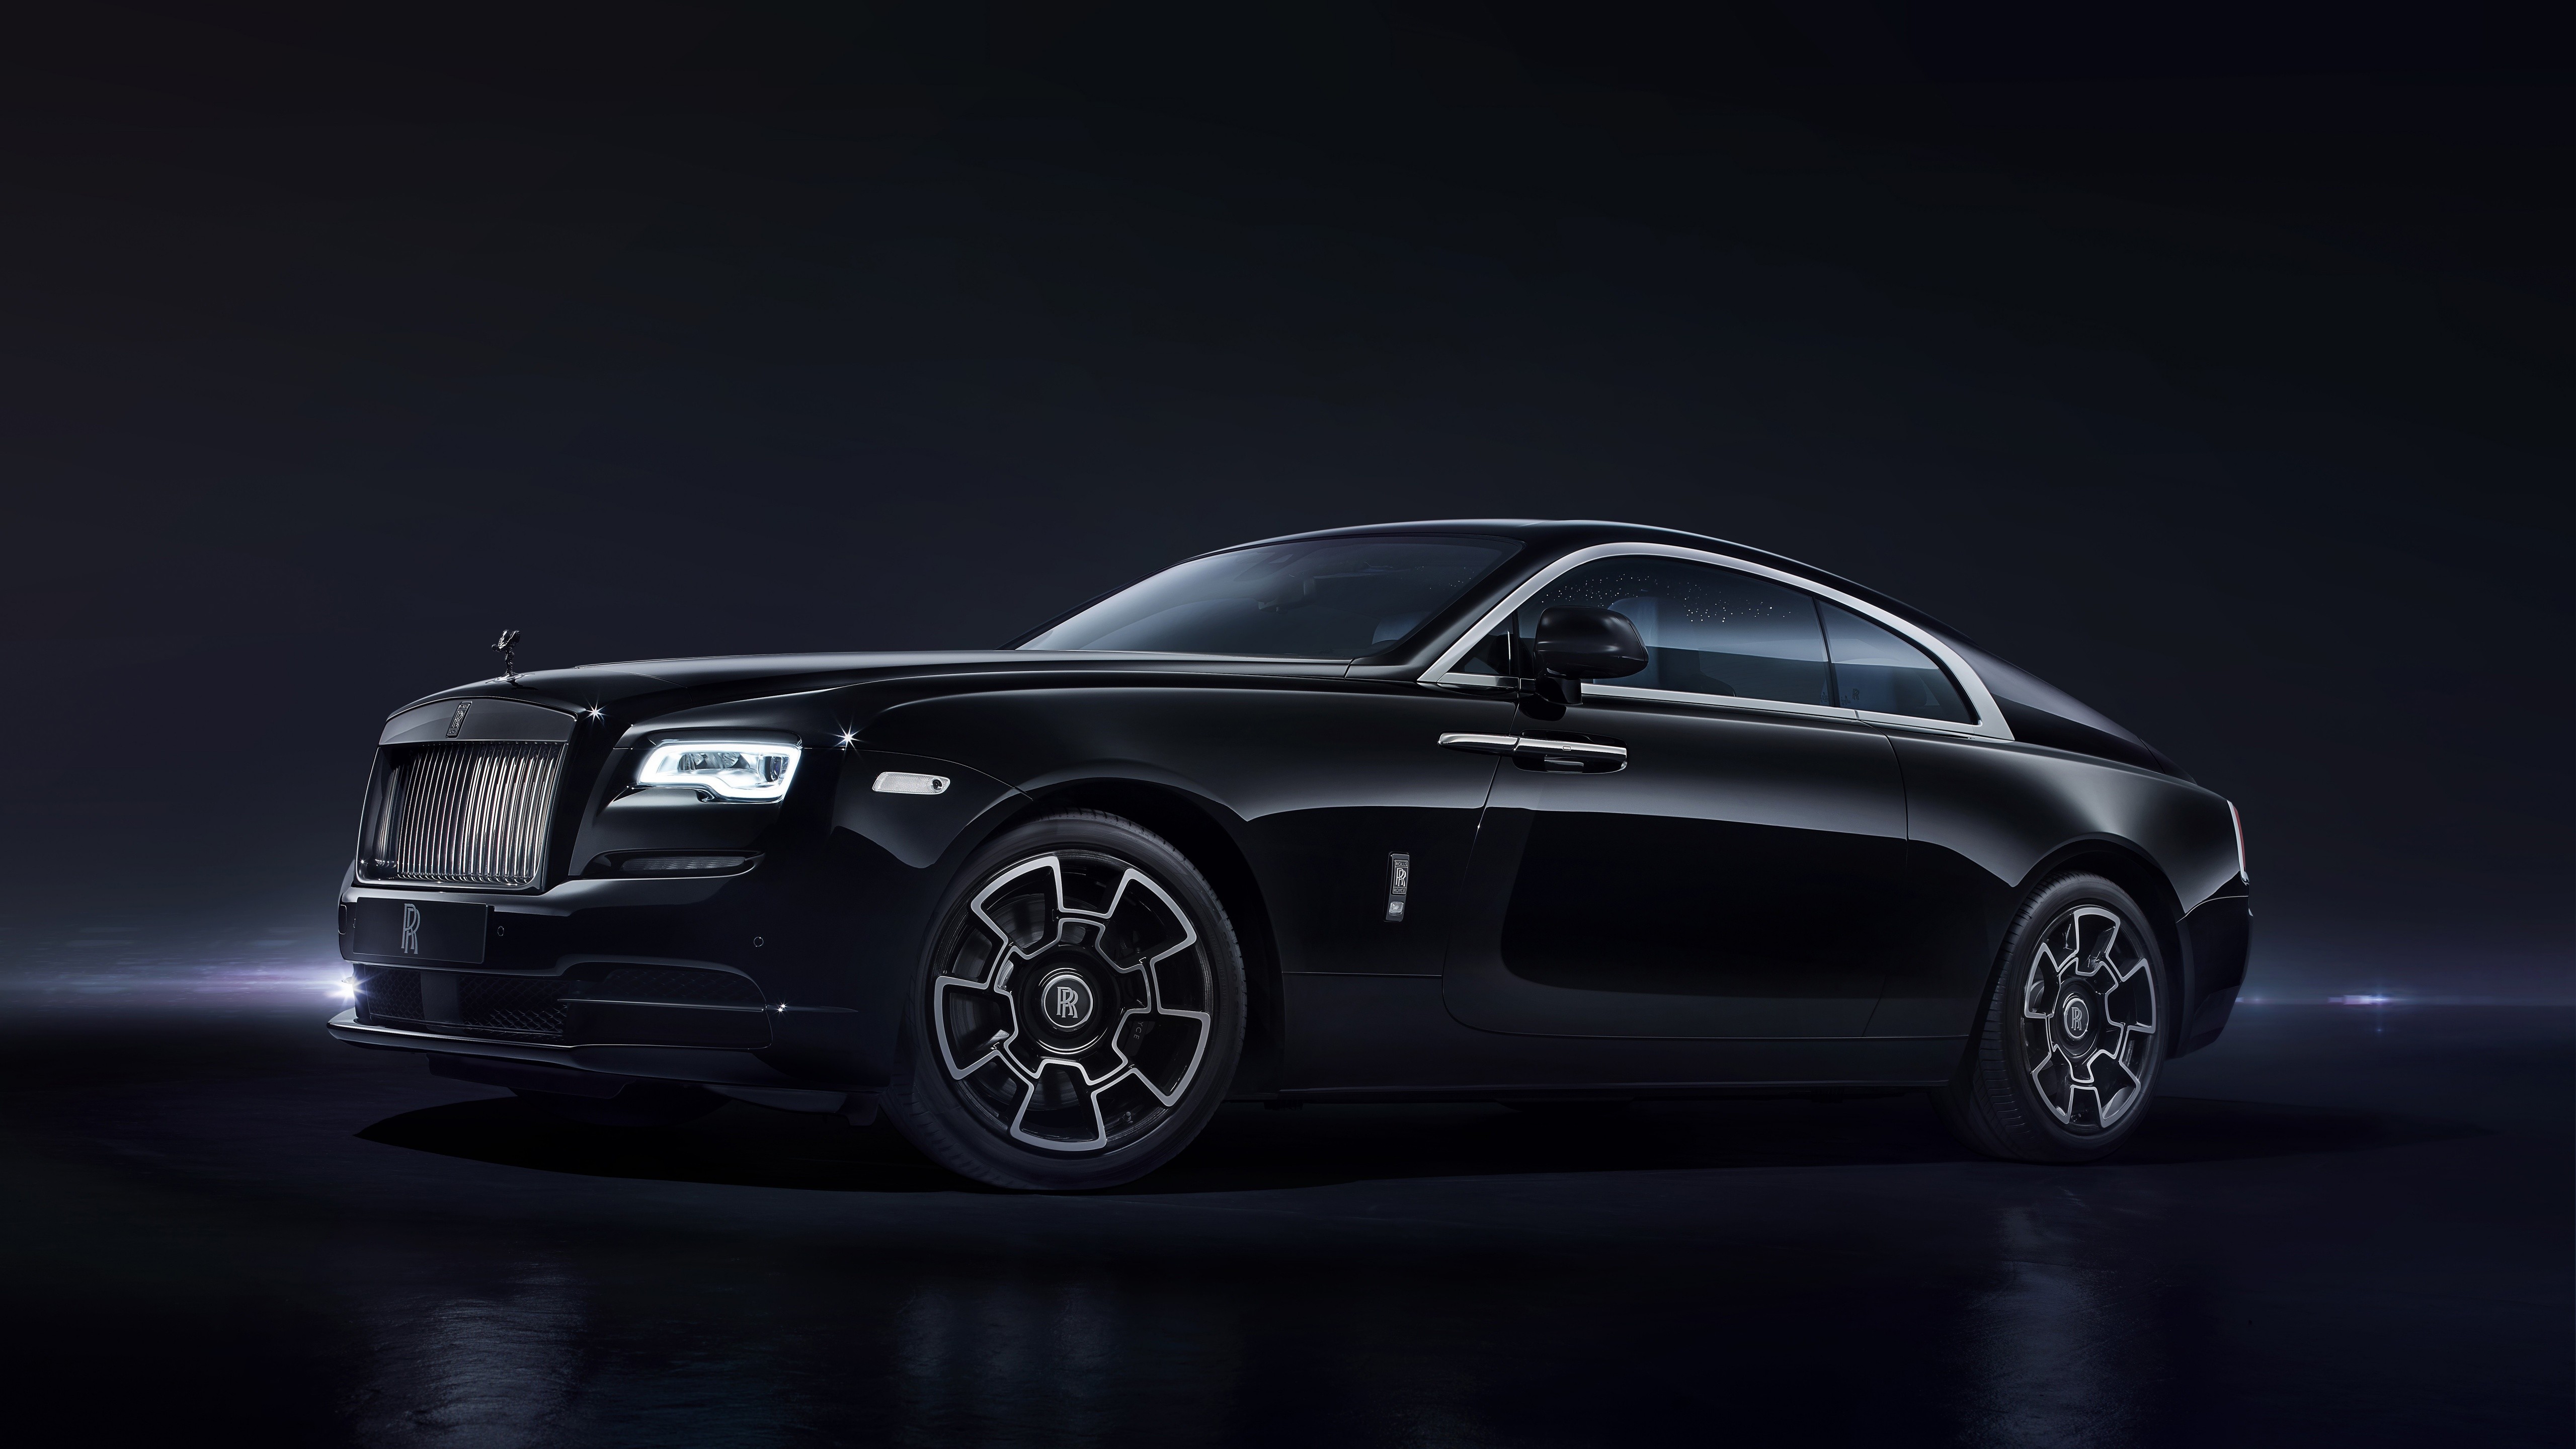 Rolls Royce Wraith in the darkroom.